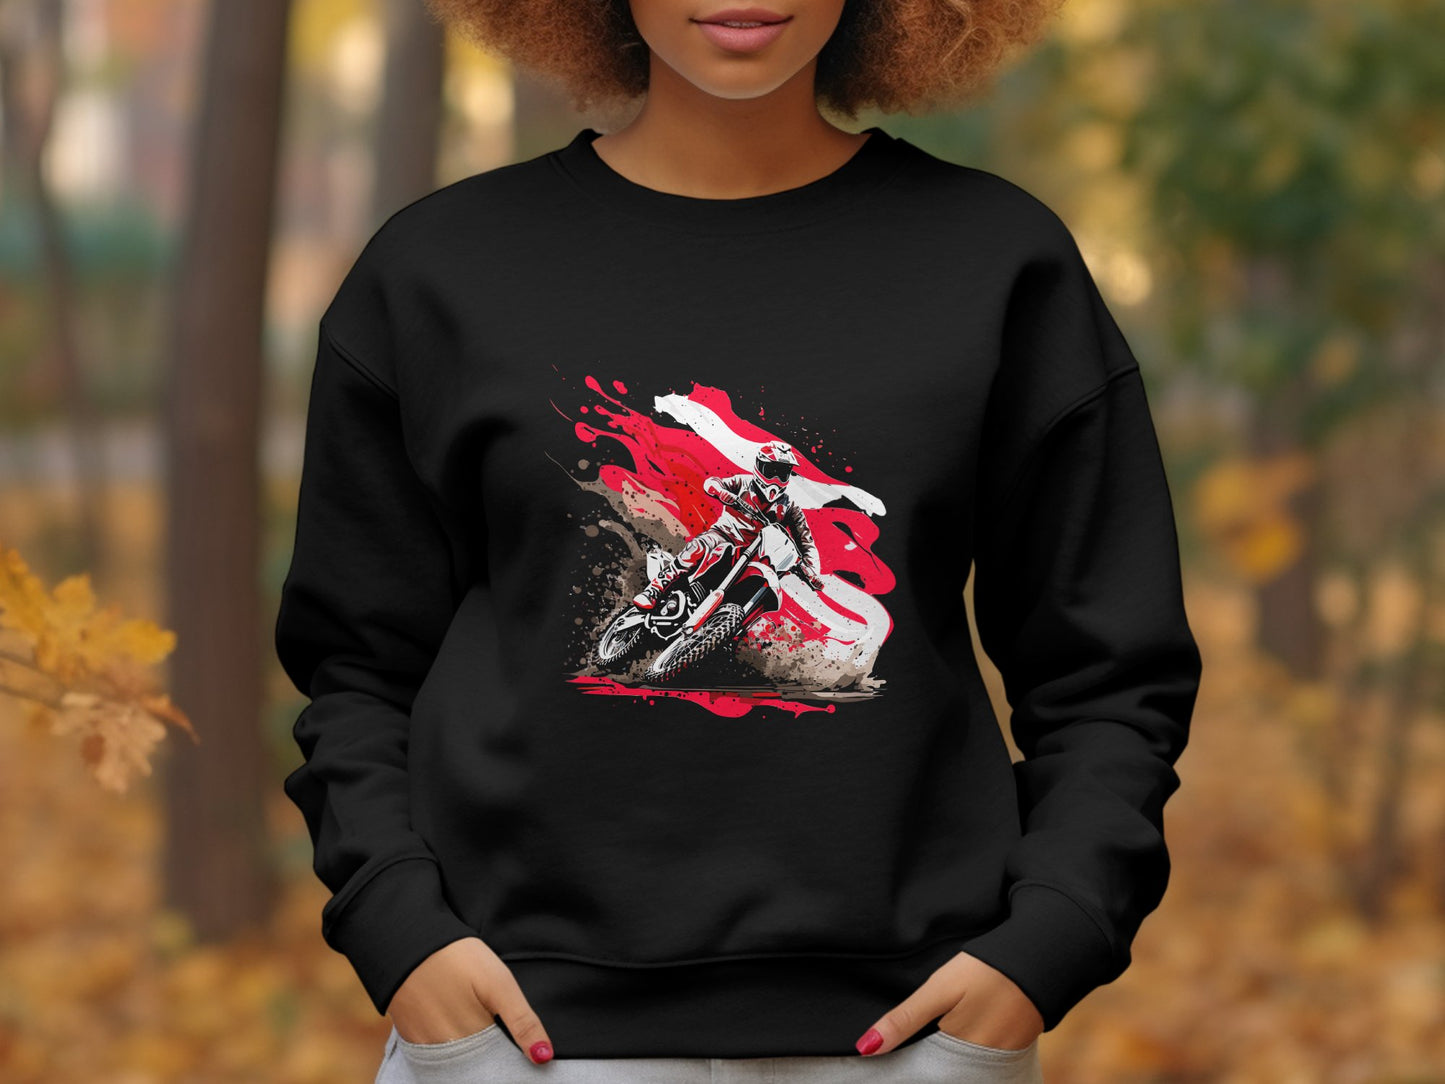 Dynamic Motocross Design - Versatile Multi-Format Collection